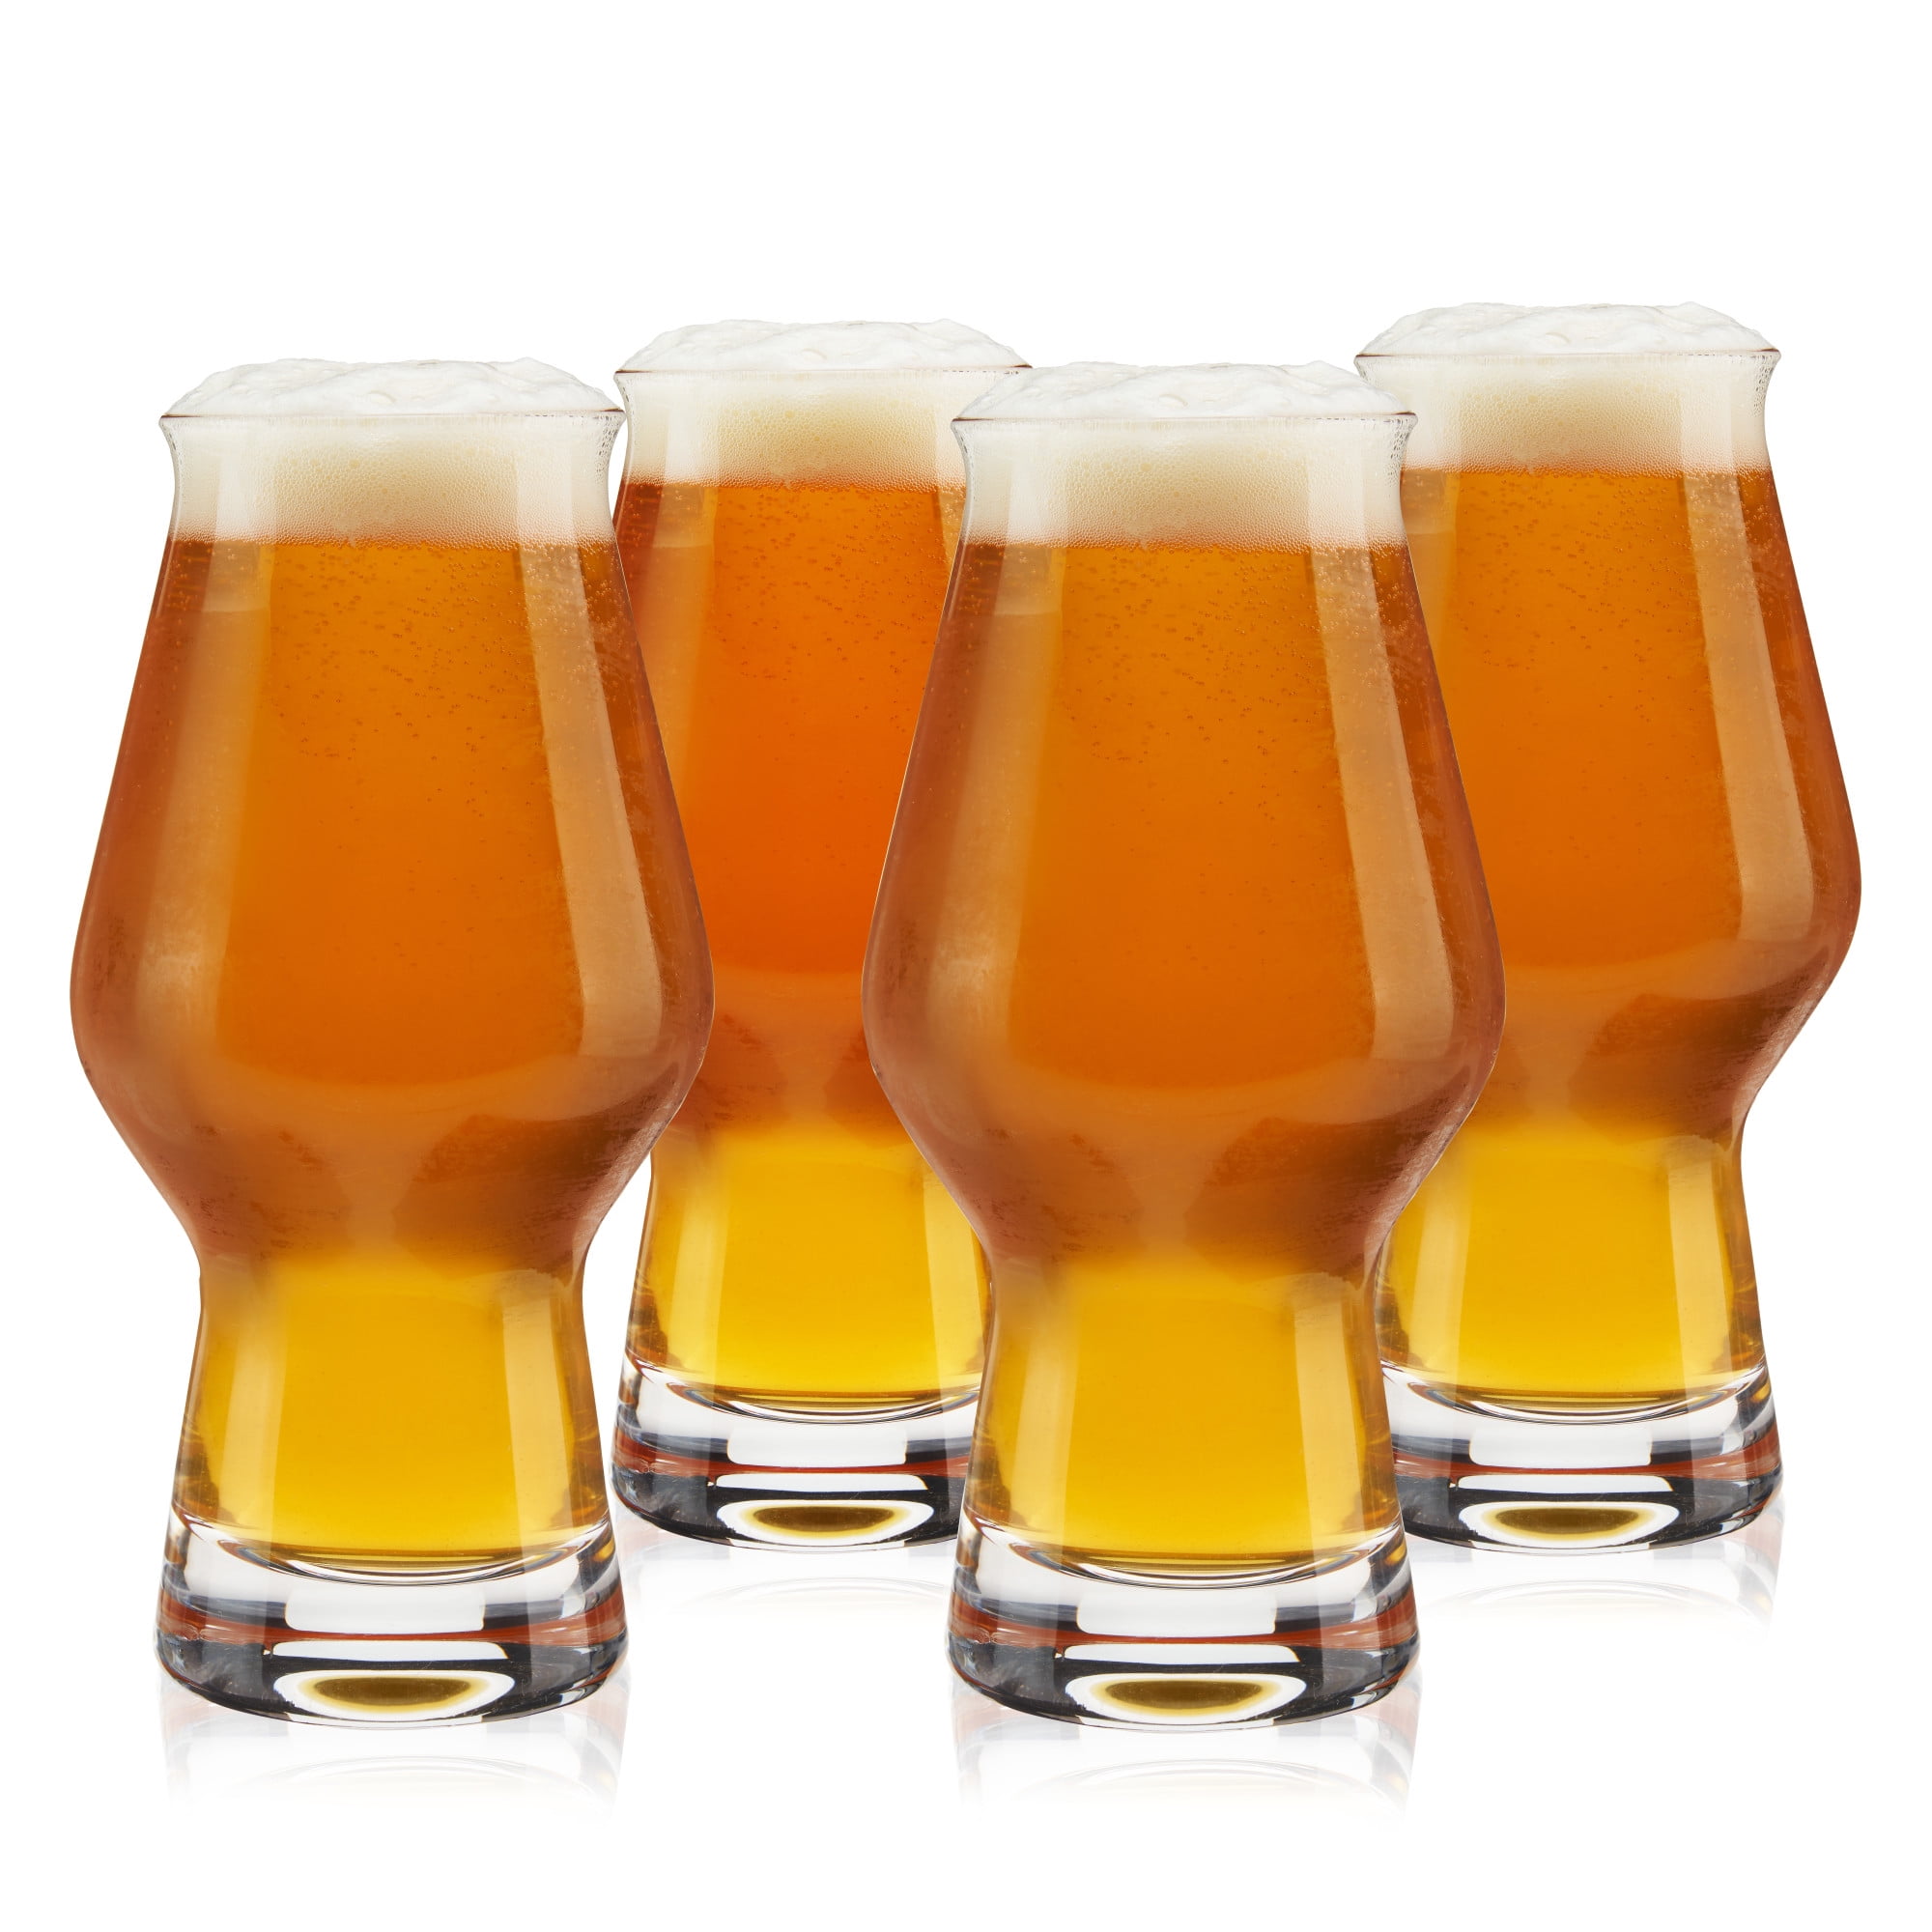 Pilsner Beer Glasses - Set of 4 from Realtree